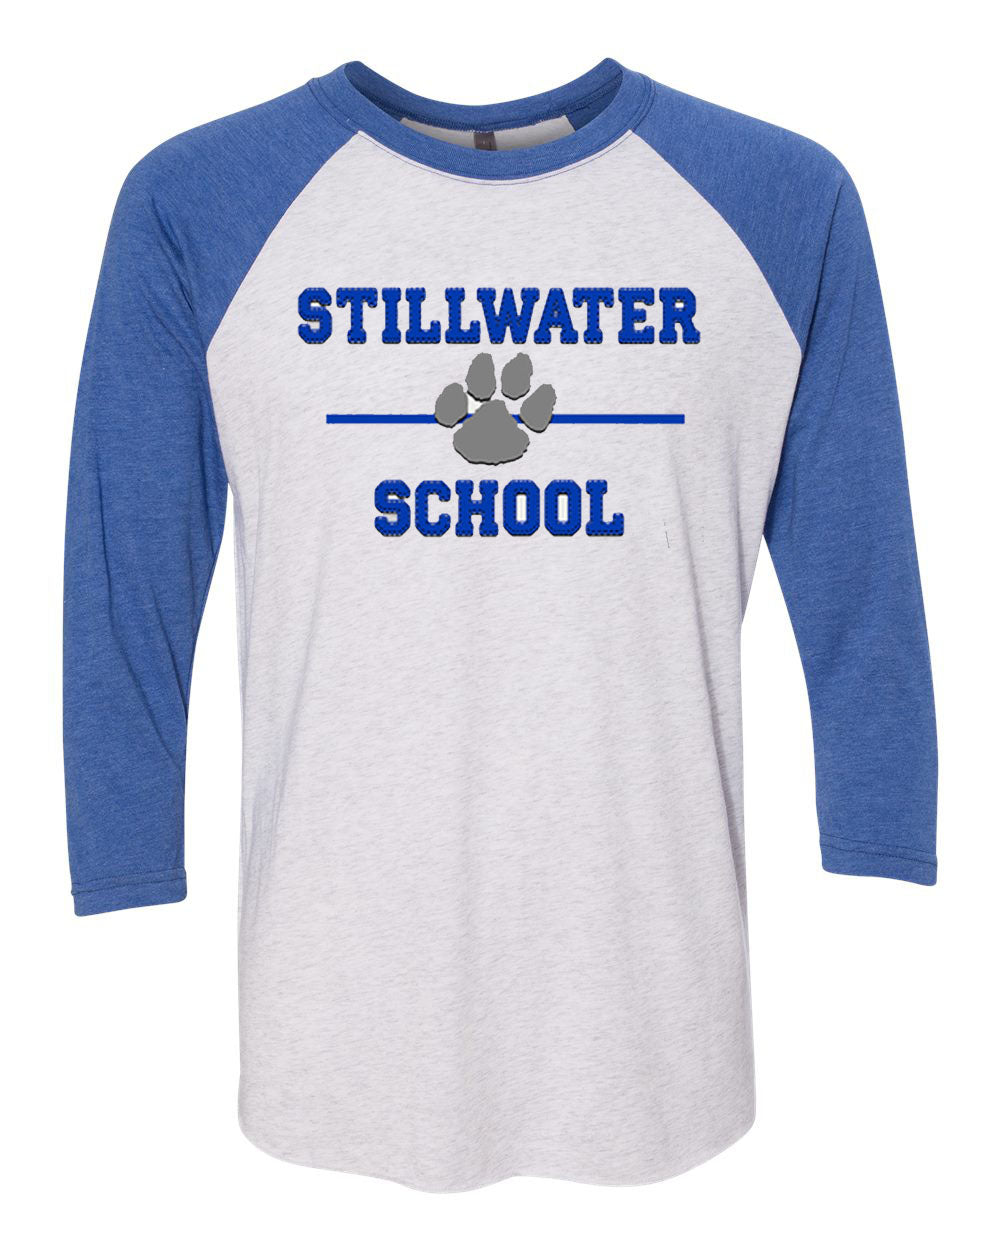 Stillwater Design 11 raglan shirt